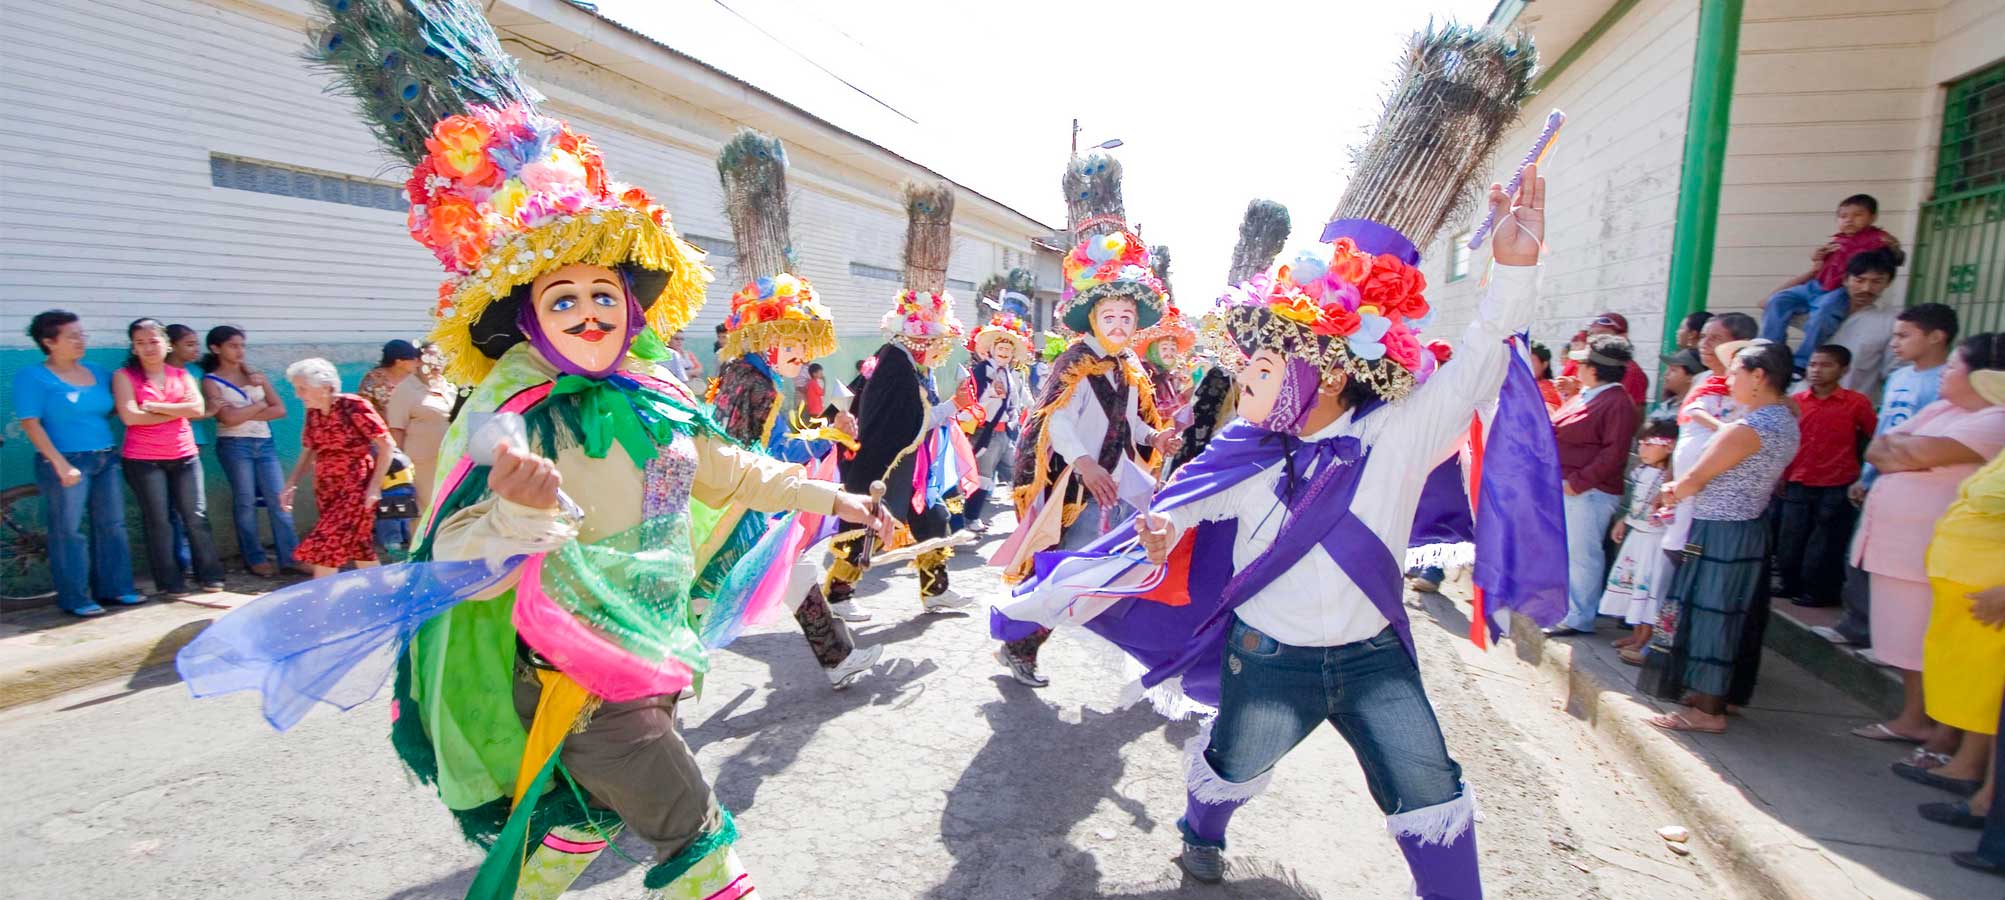 Events and Fiestas - Nicaragua Tourism